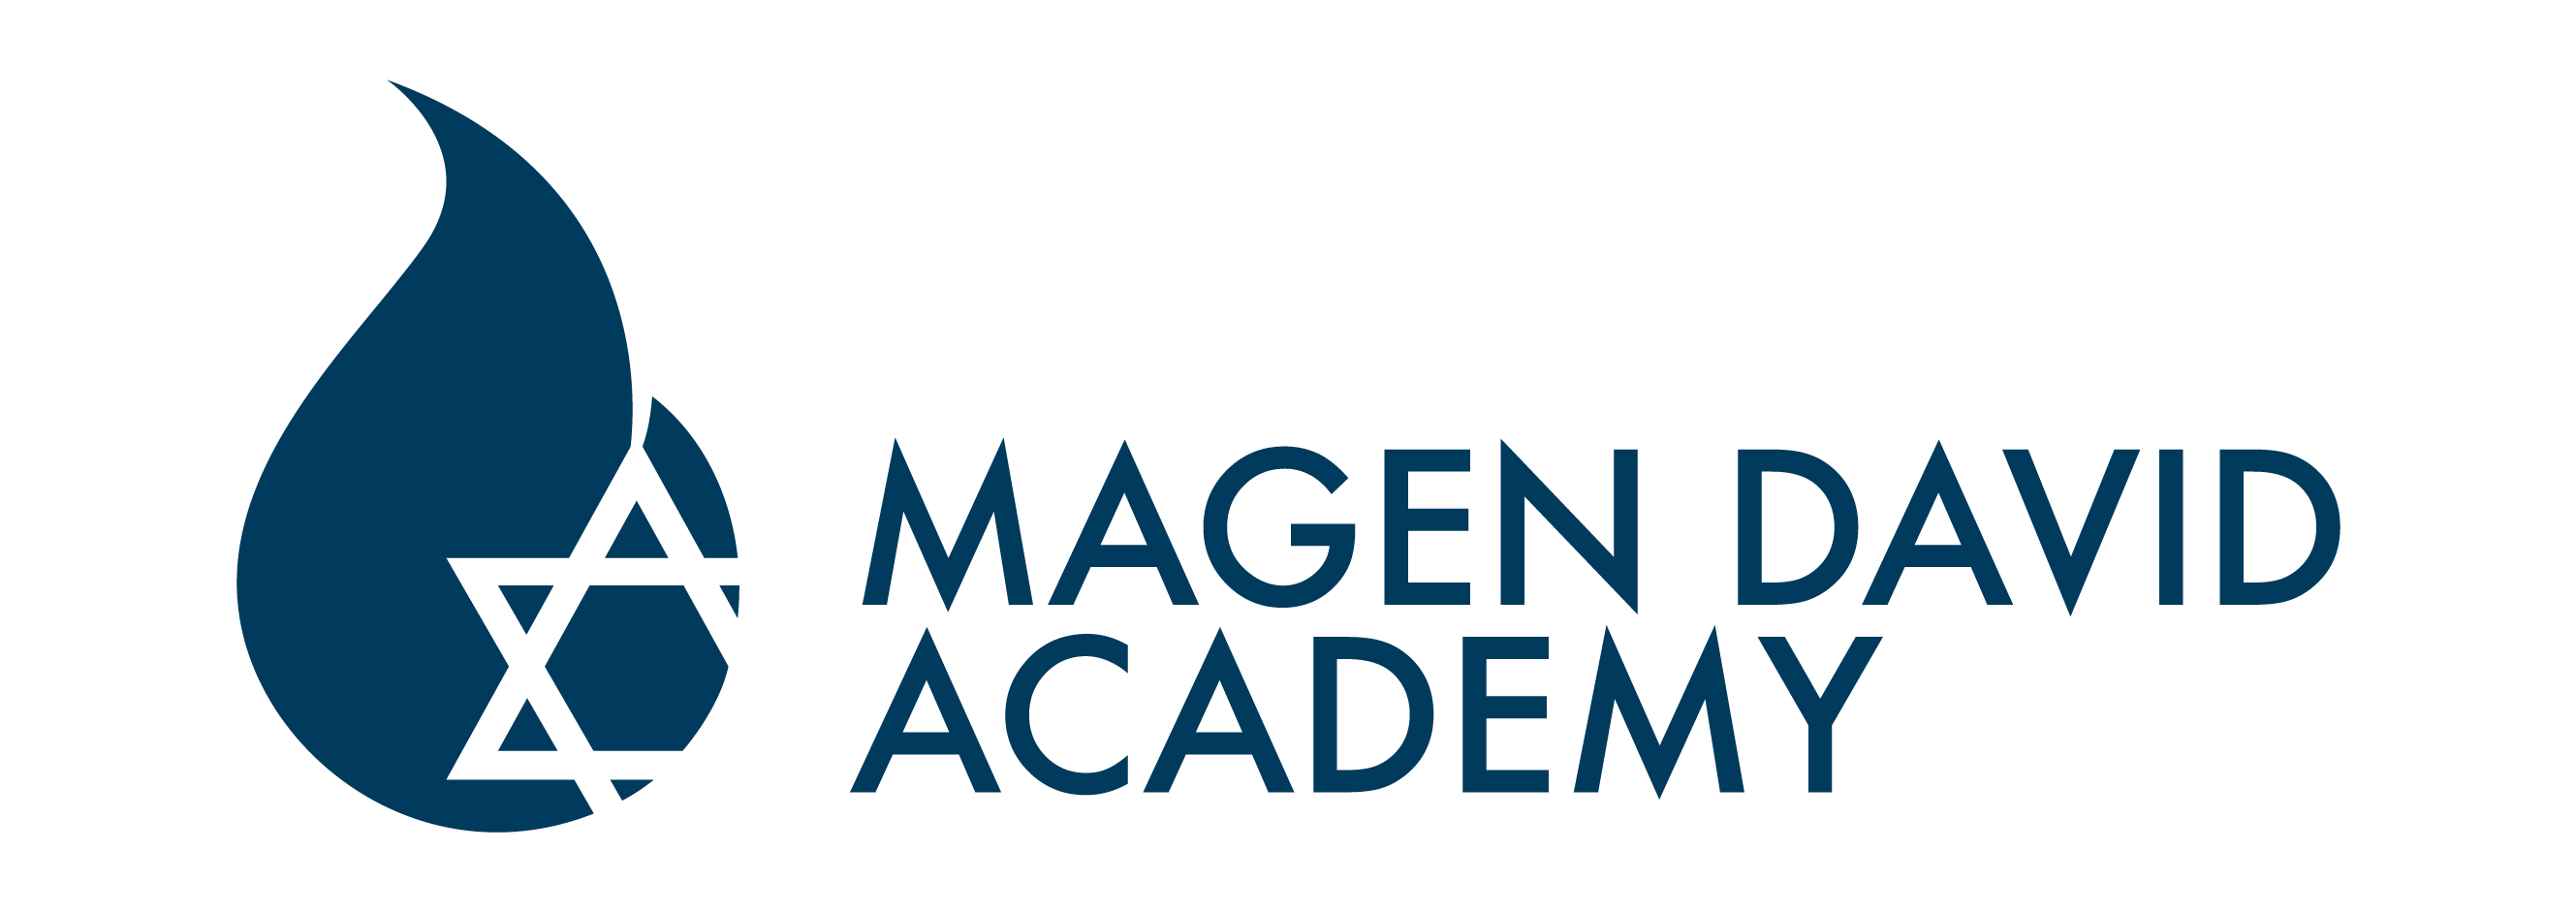 Magen David Academy